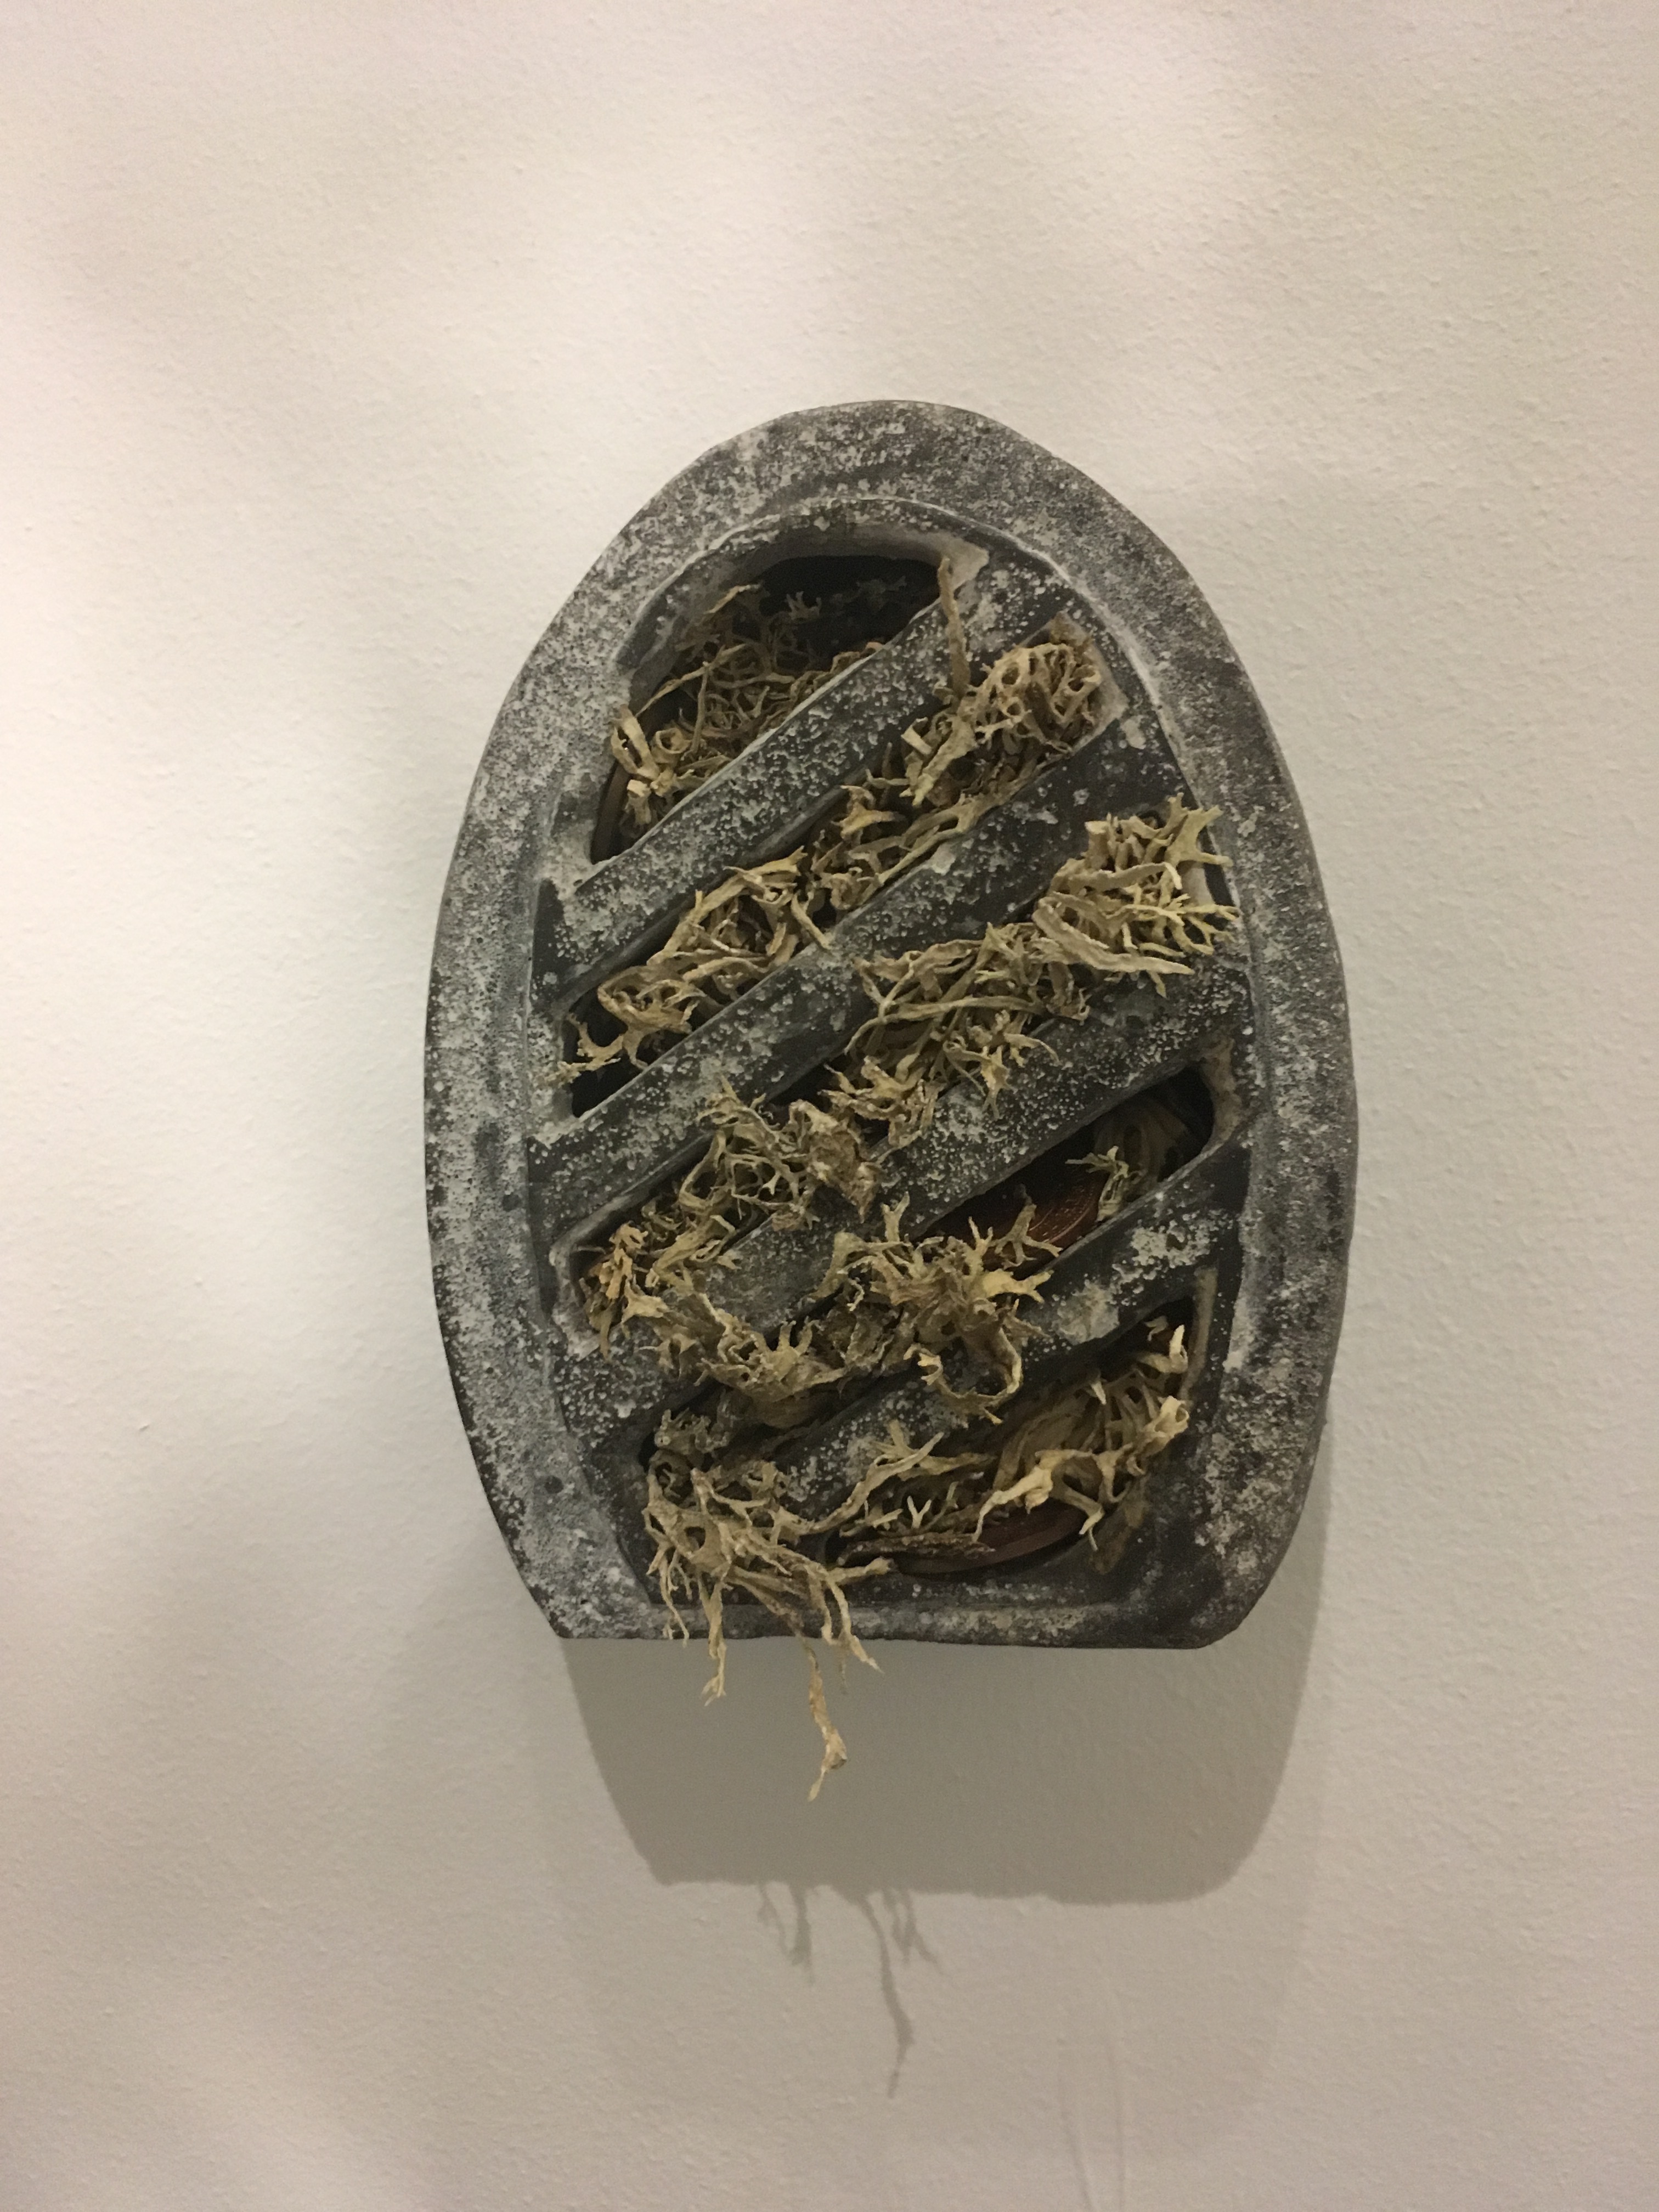 Victoria Adam: Wholemeal breeze (oakmoss / copper / Coke) (2018) Aluminous cement, oakmoss, 16p in 1p coins, Coca-Cola; 12 x 9.5 x 6cm. at Lungley Gallery, London.